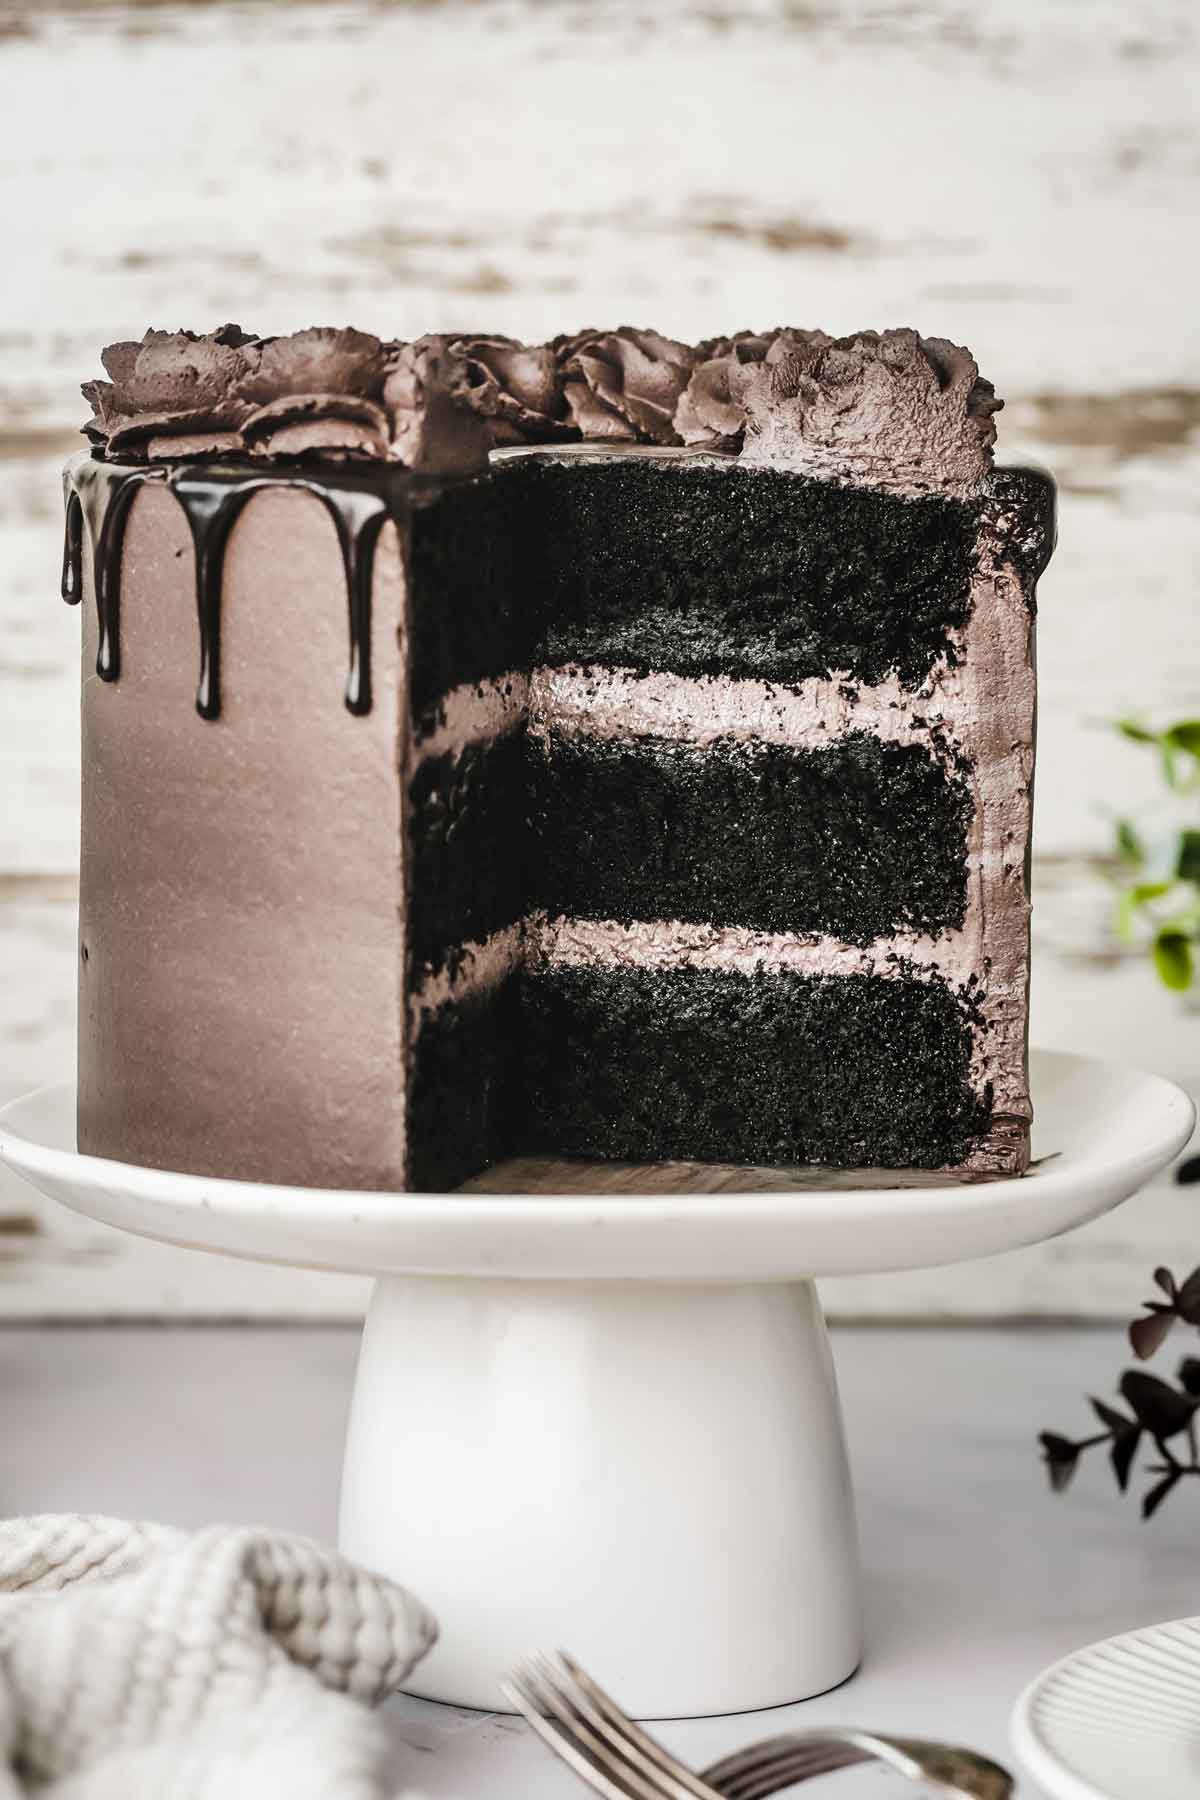 sliced black chocolate cake on a cake stand